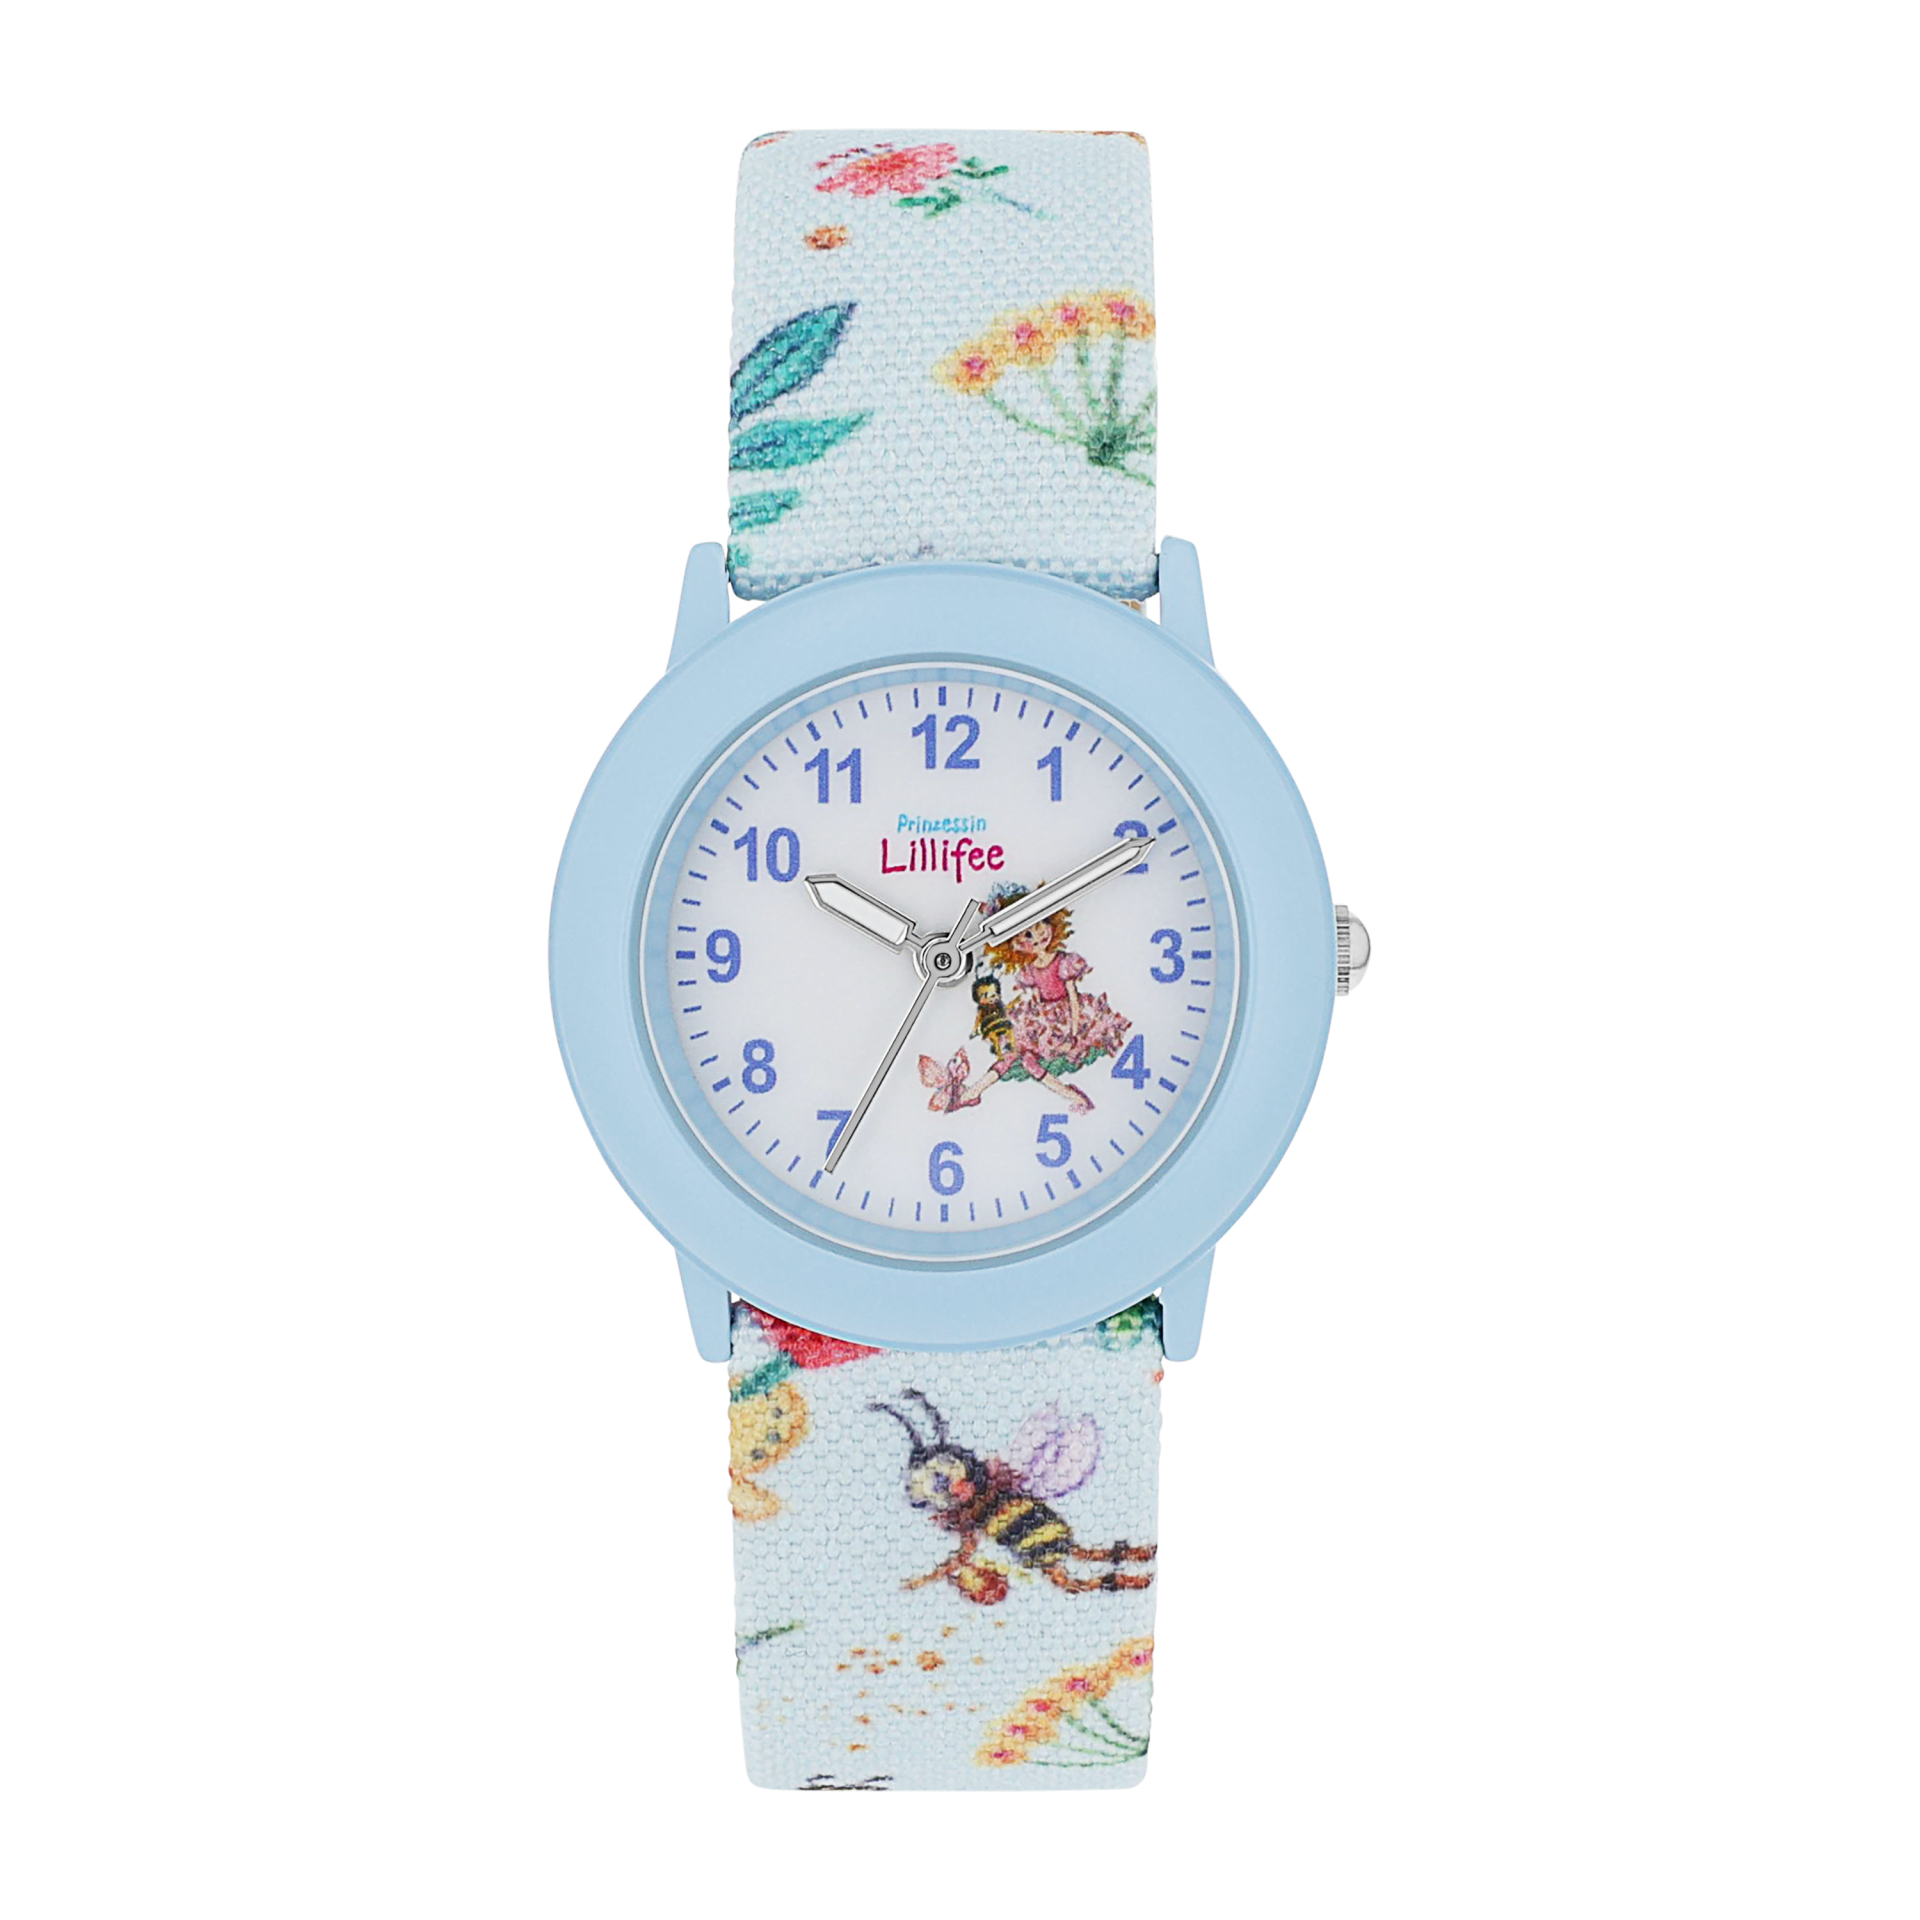 blau, Armbanduhr Biene Prinzessin Lillifee (Lizenzmarke Amor)